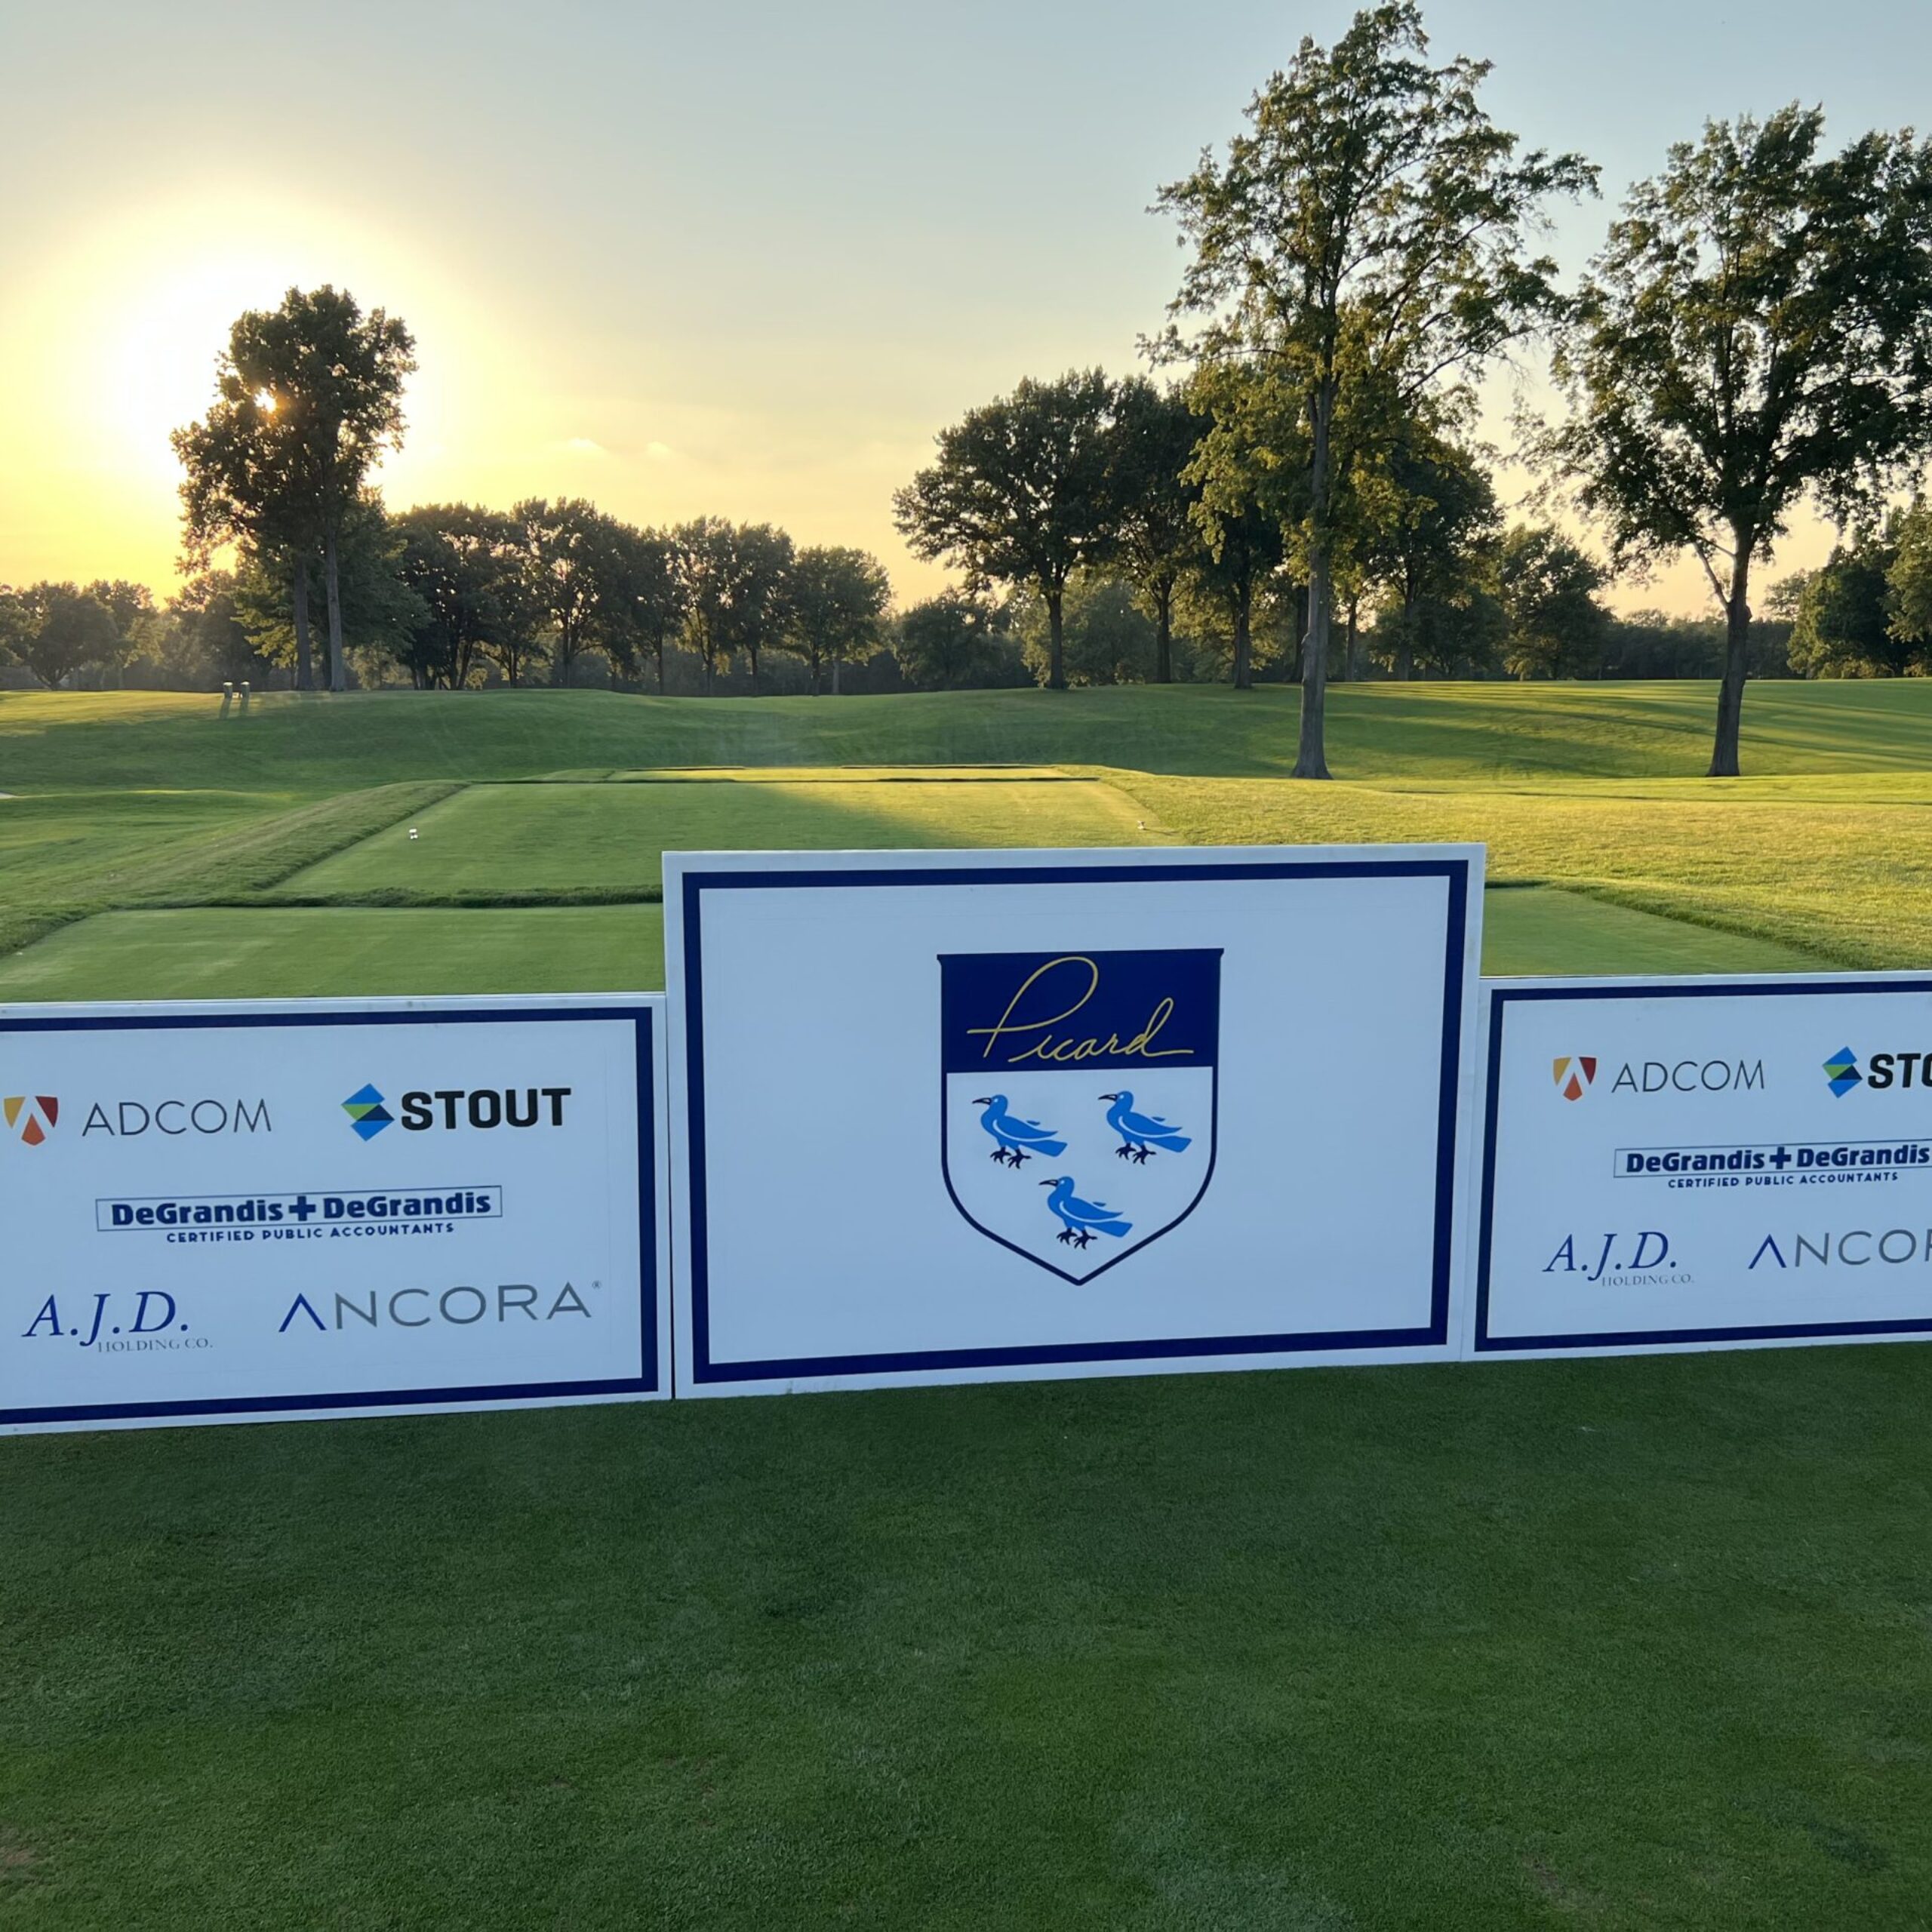 Customized sponsor banner for golfing events